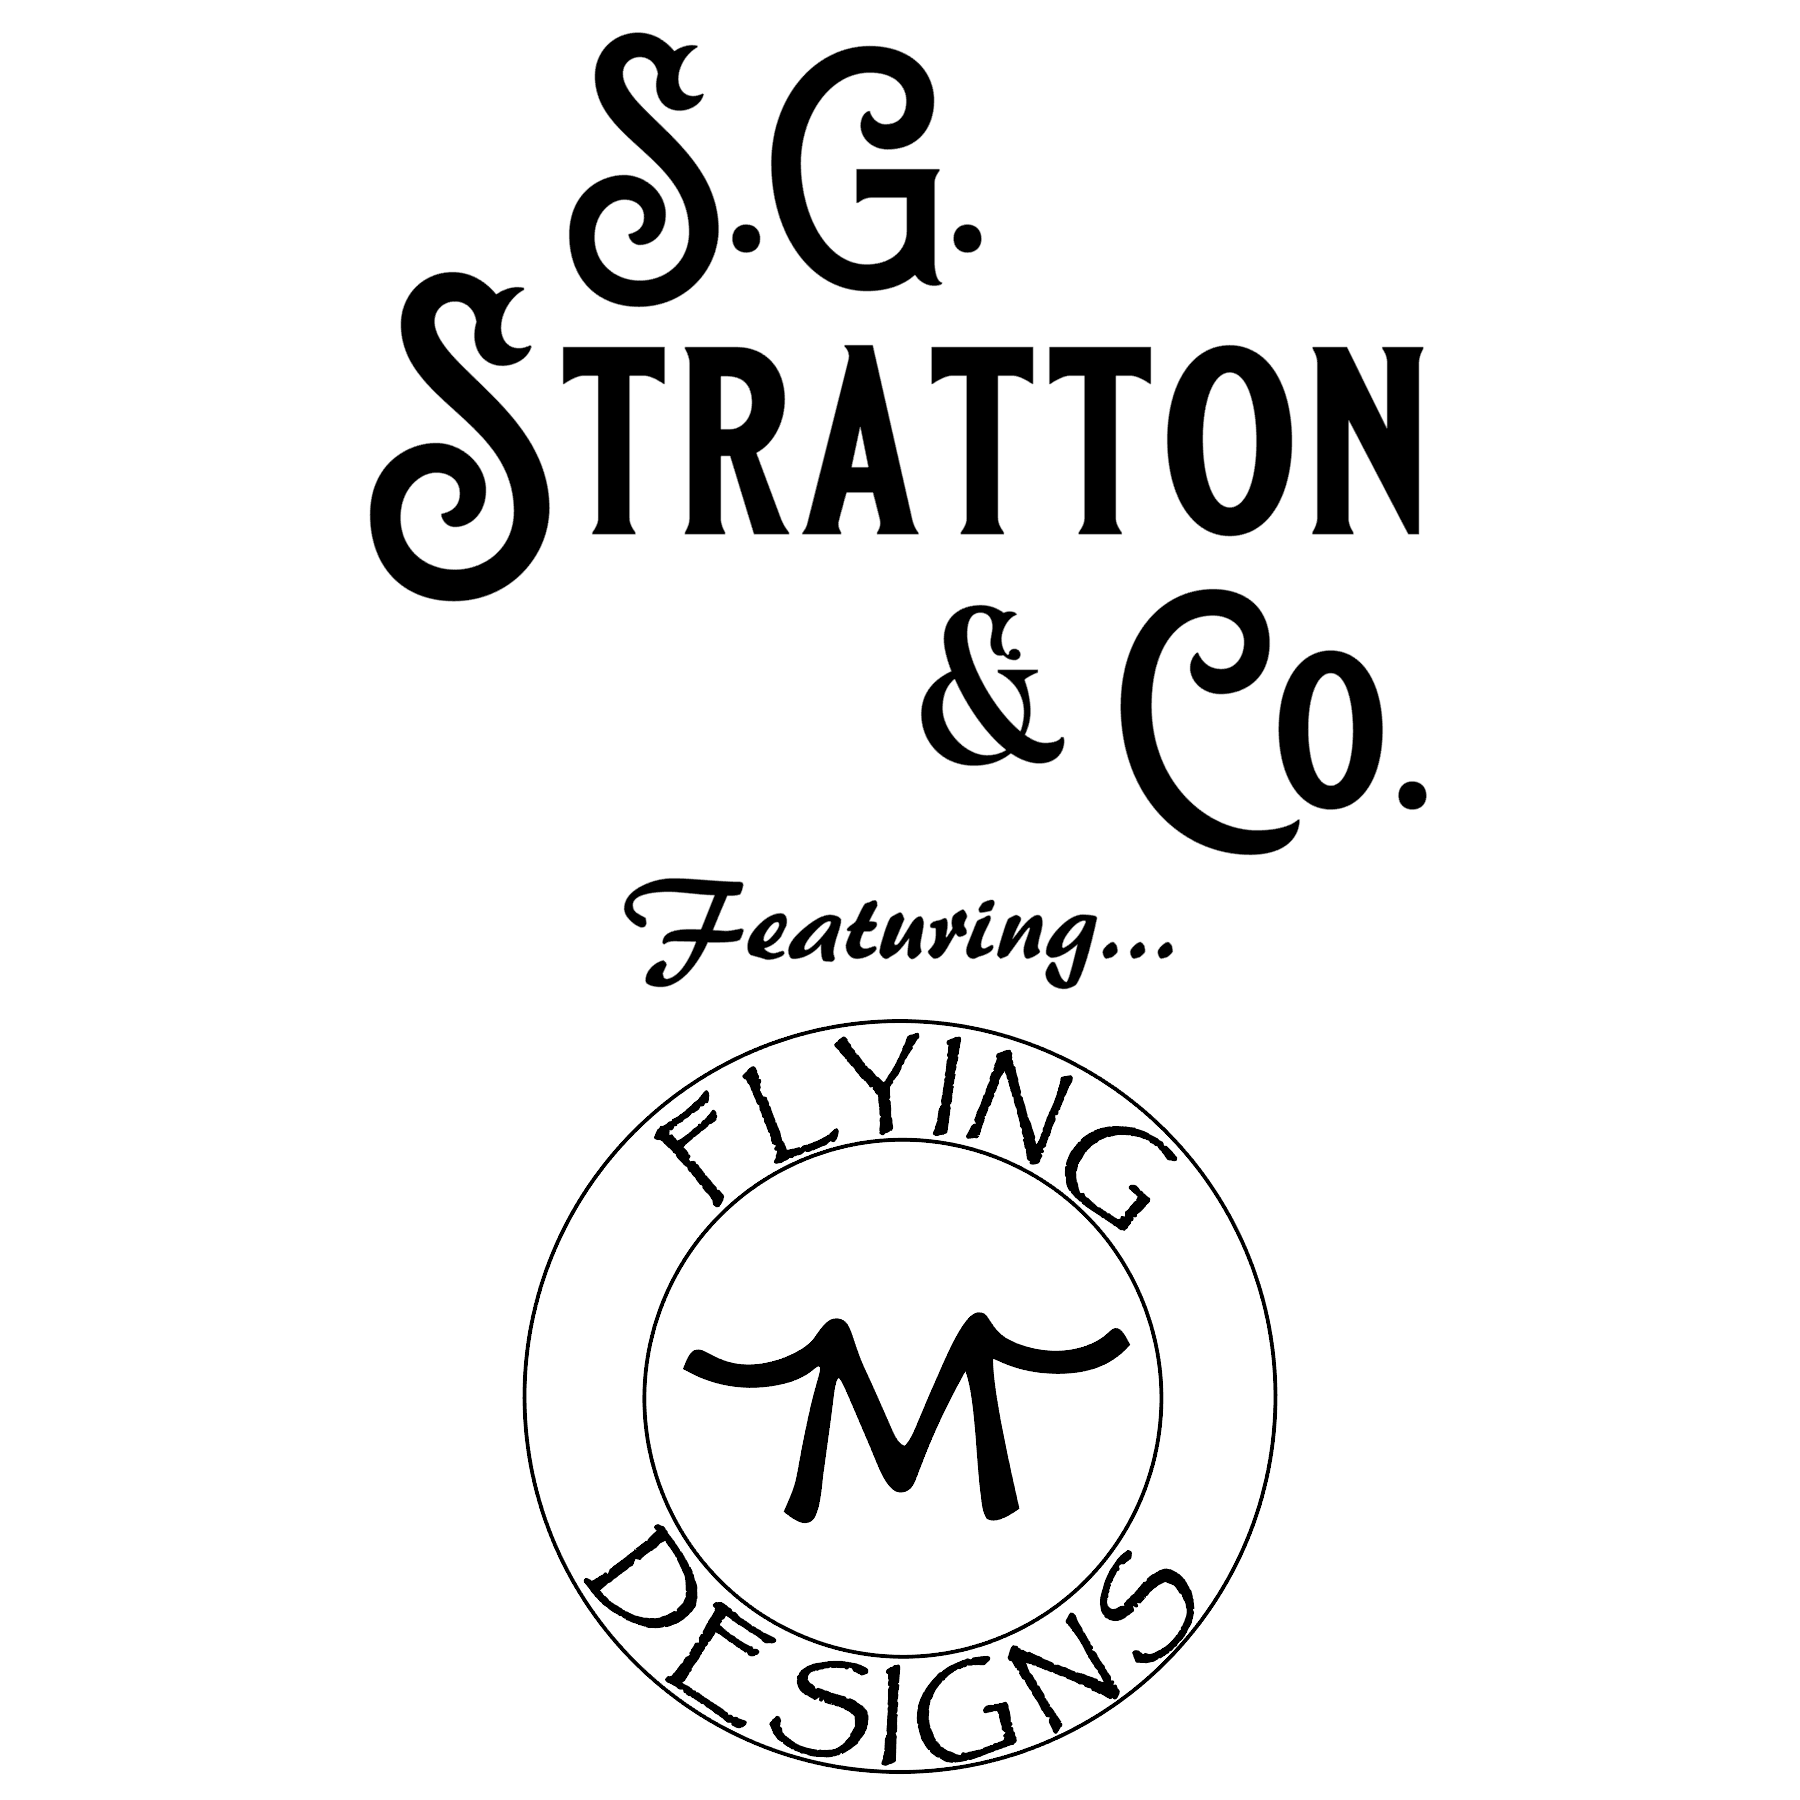 S.G. Stratton & Co.